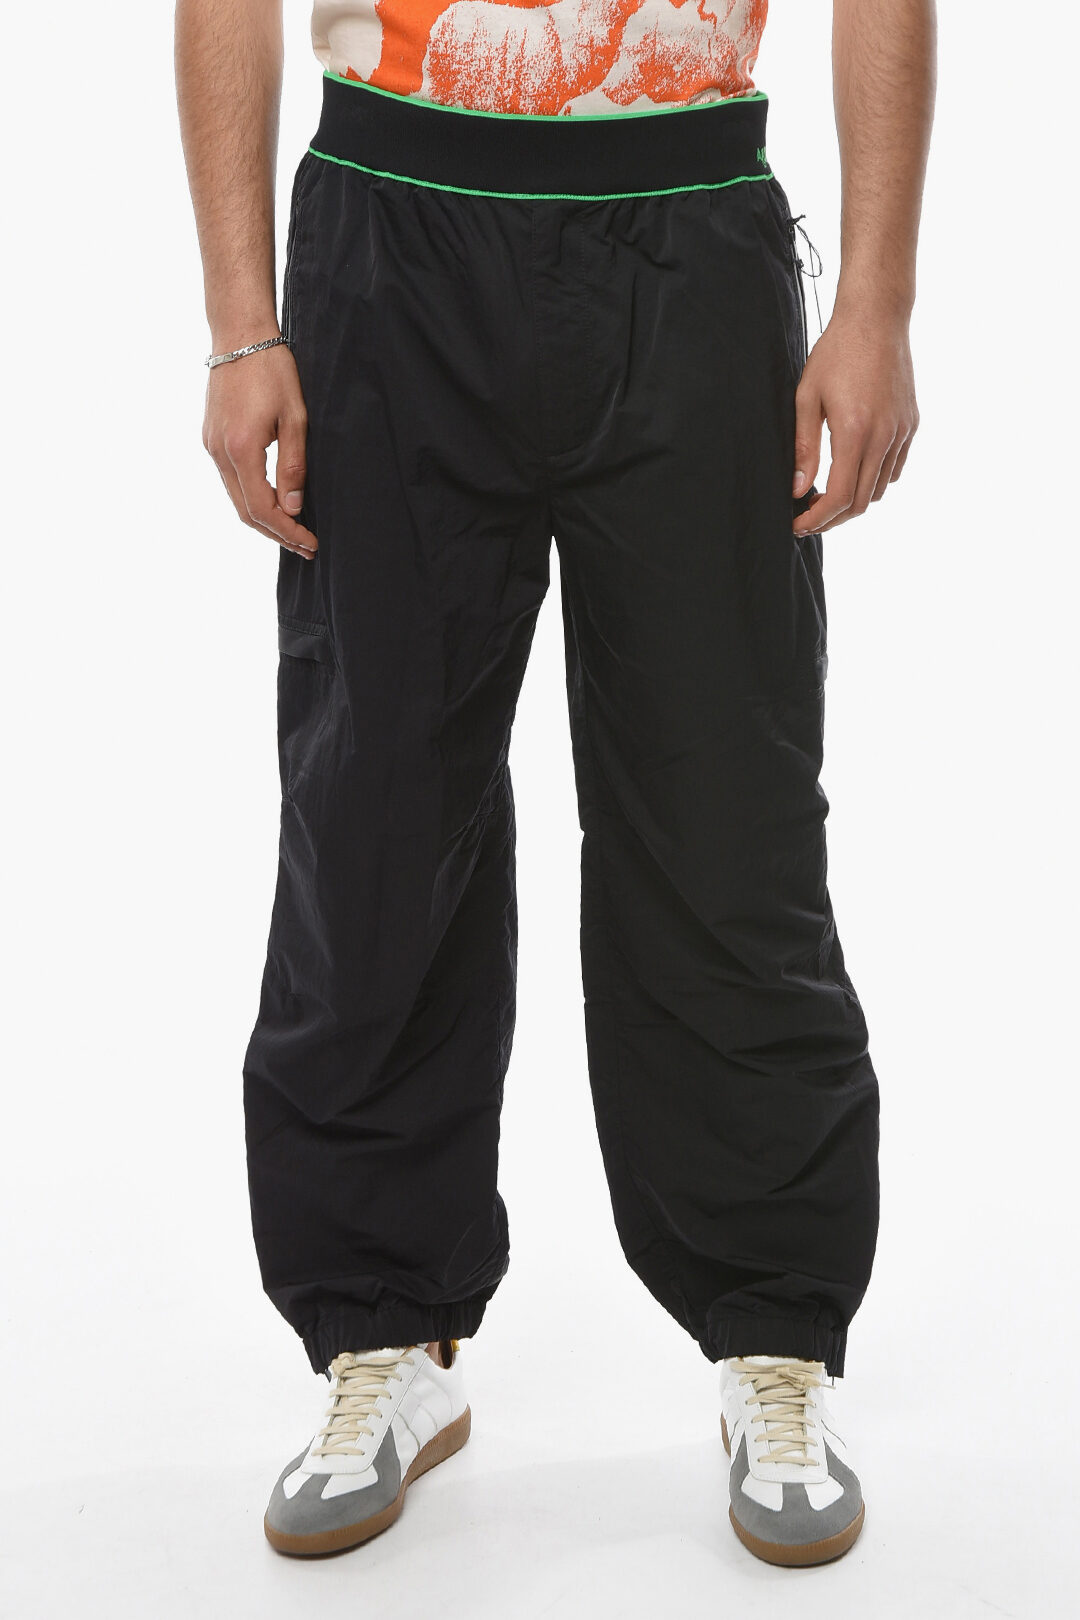 Fashion Men Cargo Pants Hip Hop Joggers Cargo Pants Men Harem Pants Multi  Pocket Man Sweatpants Streetwear Casual Mens Pants Track Pants